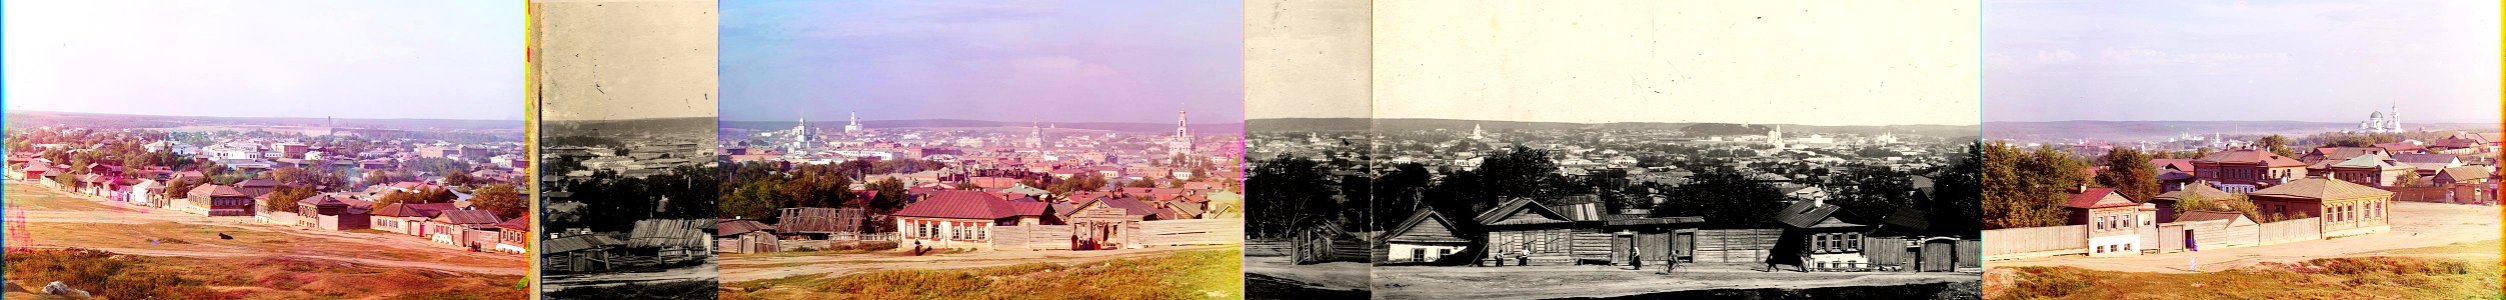 1910Prokudin-Gorsky panorama photo